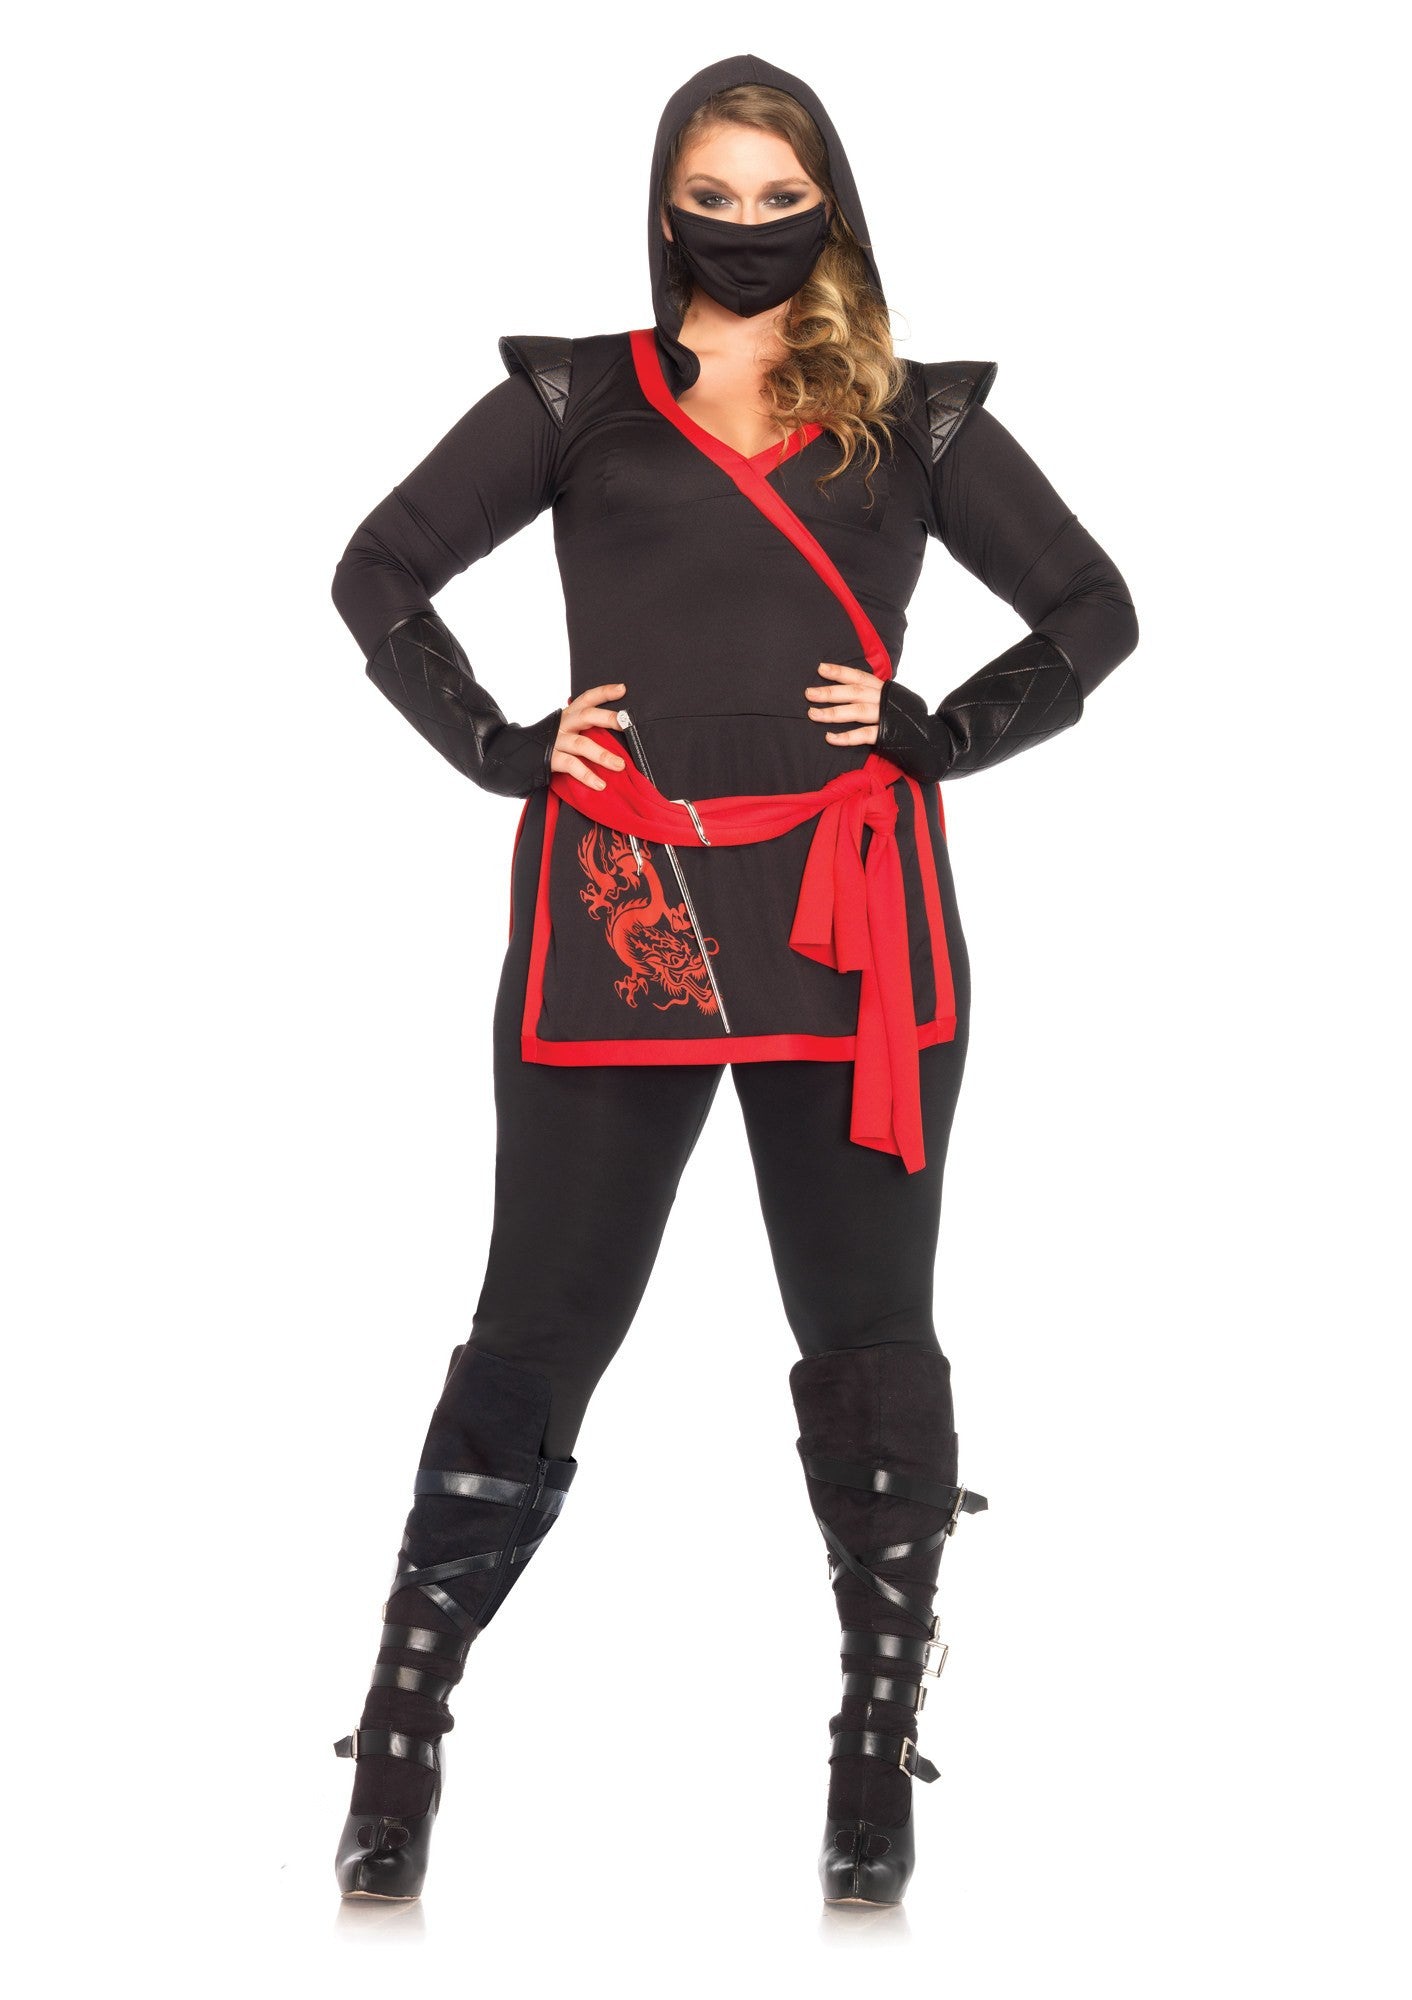 Costume - Black Ninja Assassin